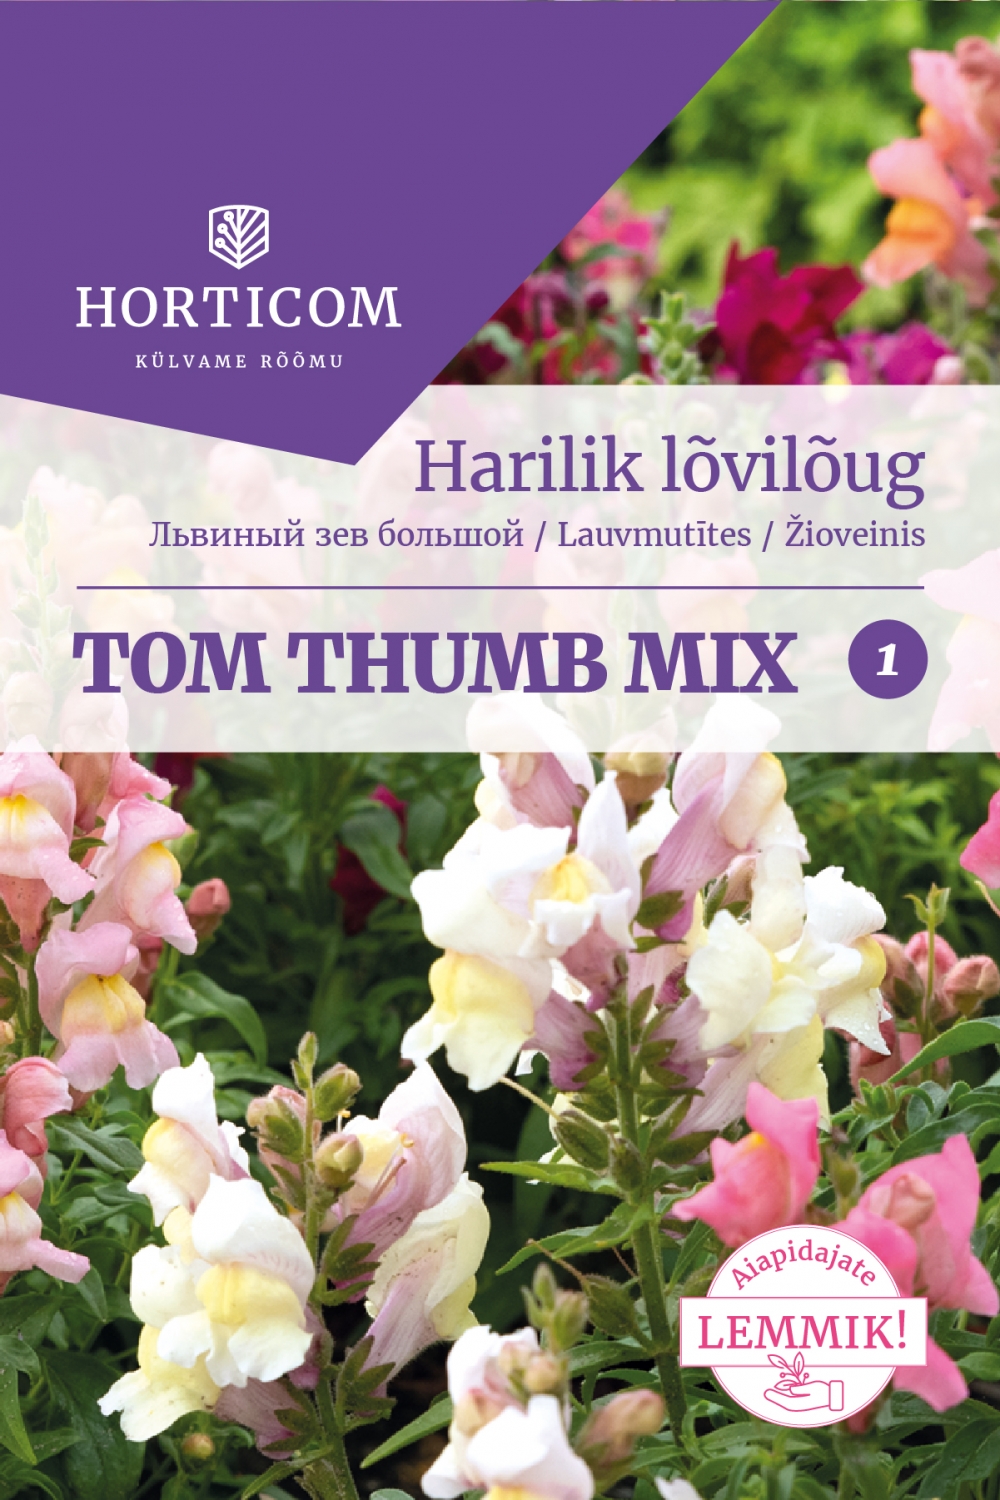 Harilik lõvilõug Tom Thumb mix 1g 1